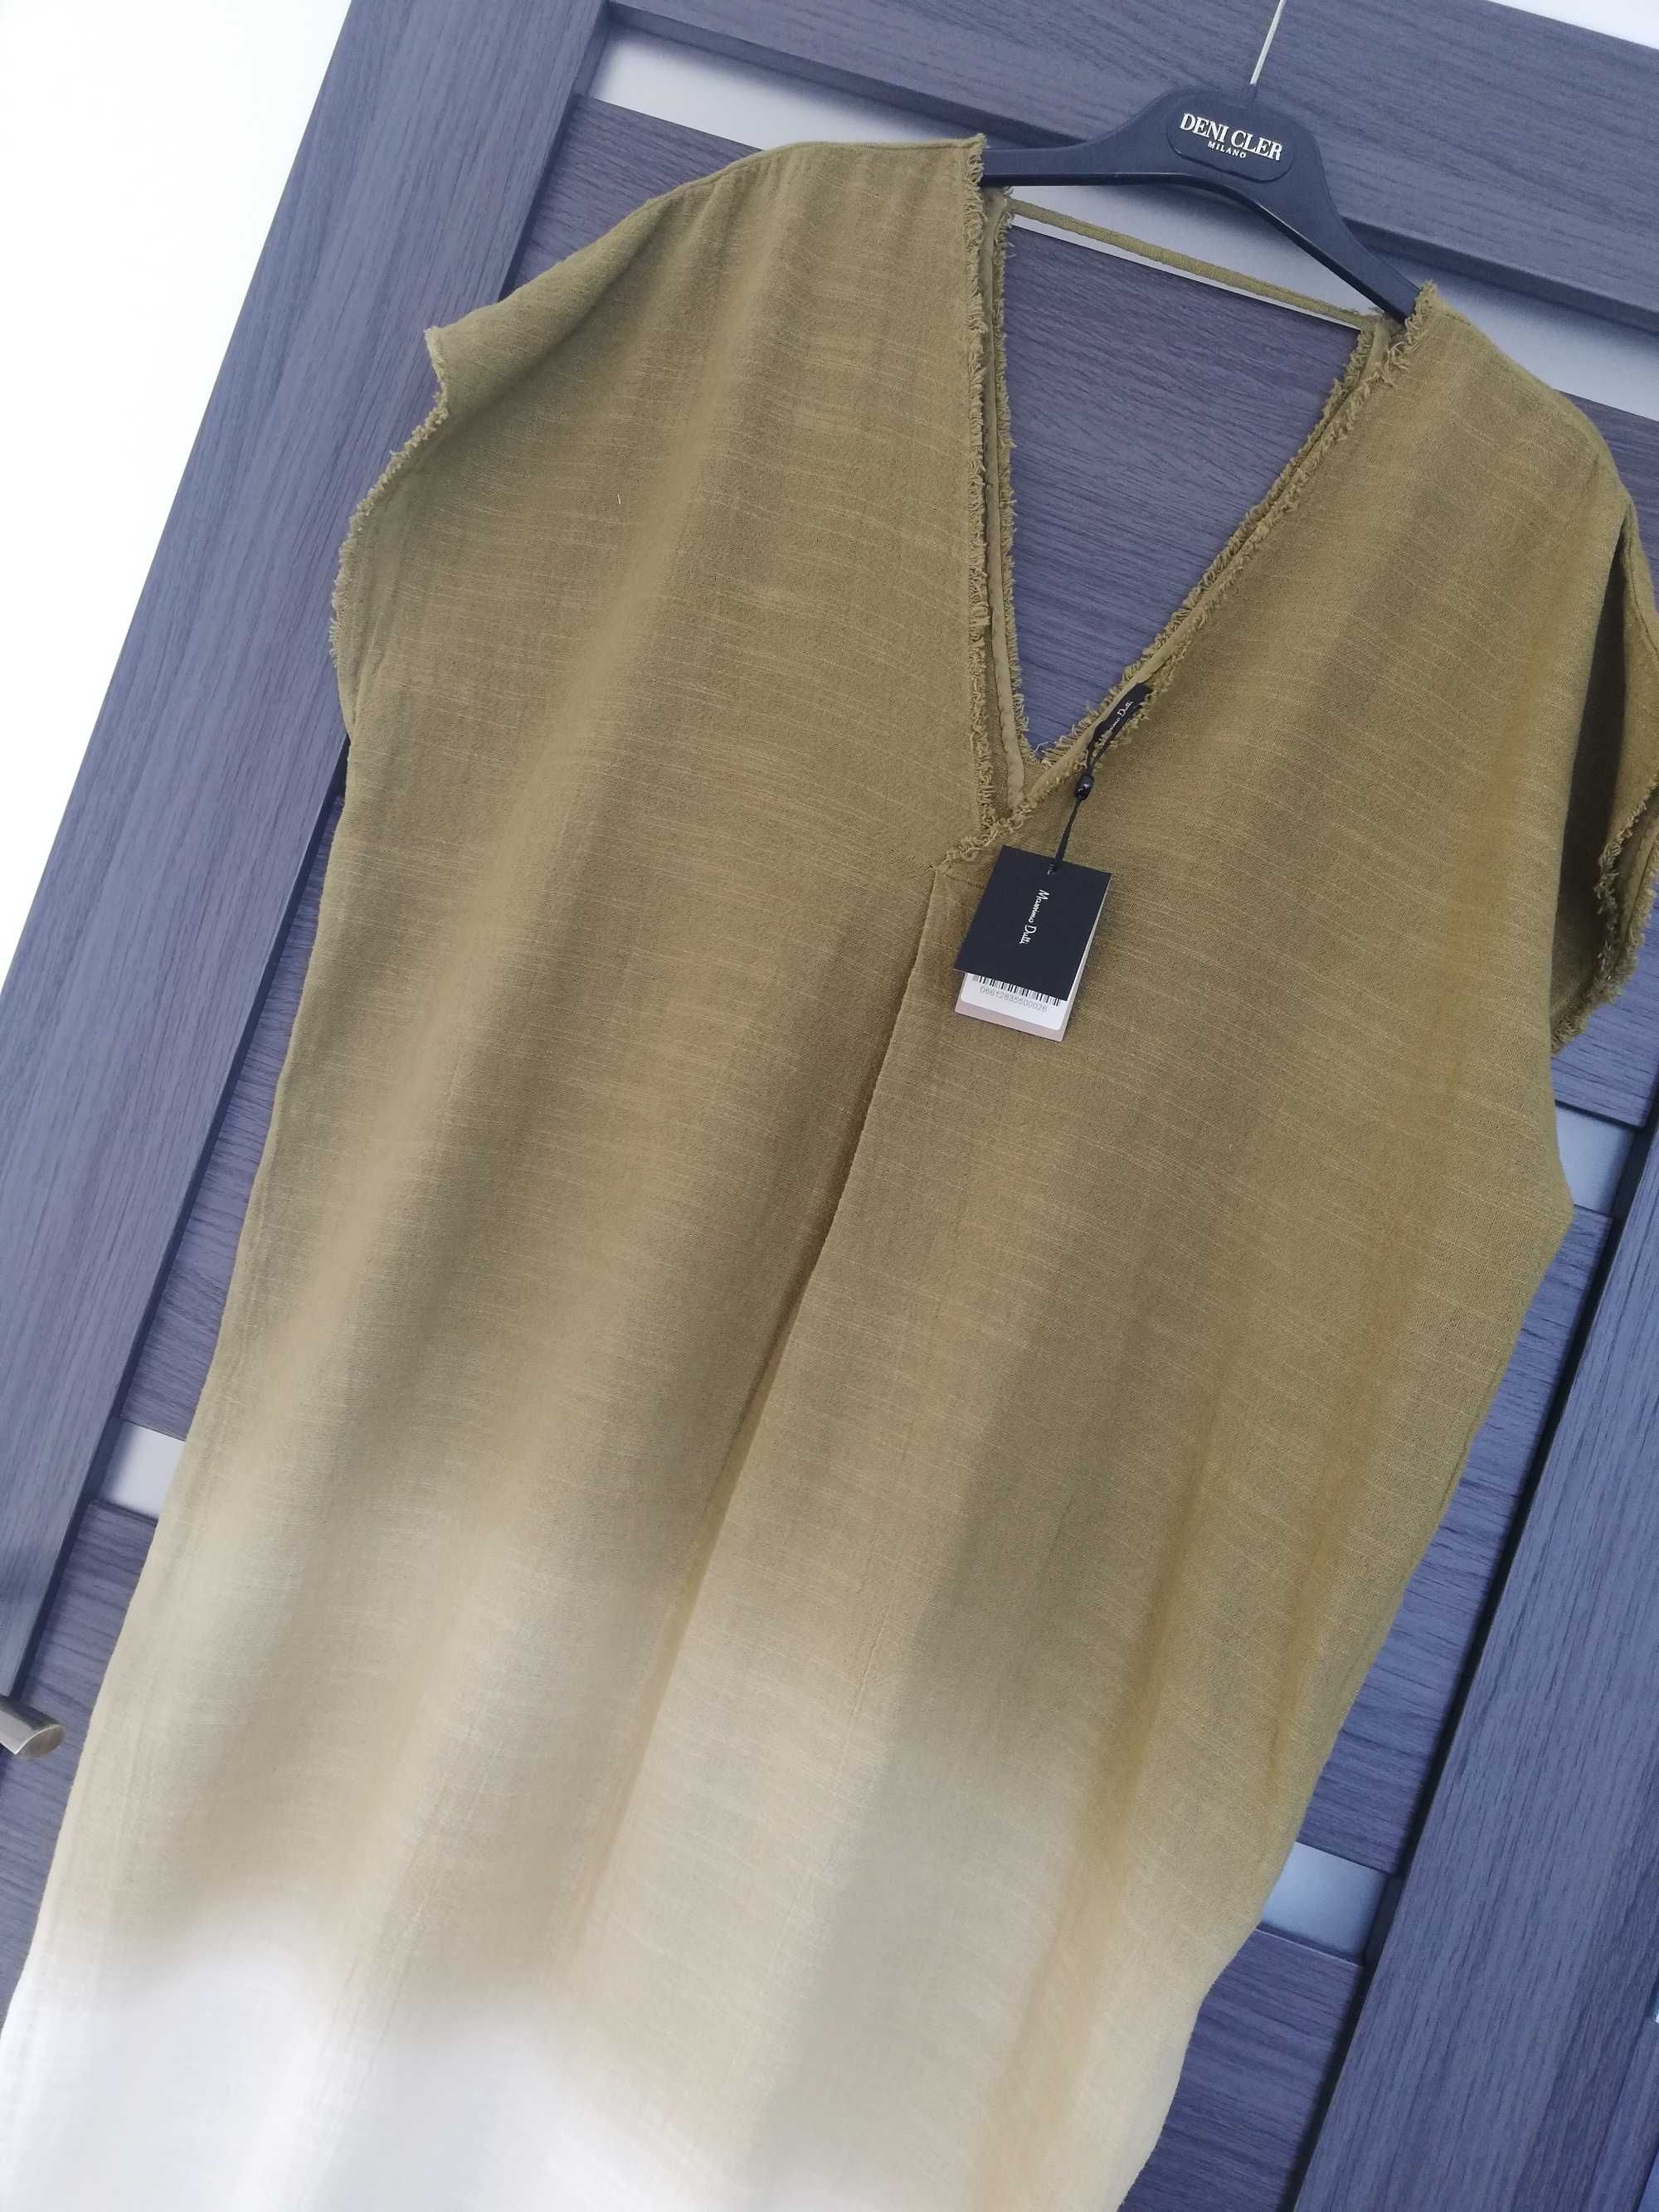 Massimo Dutti letnia długa sukienka plażowa tunika 42XL khaki beżowa